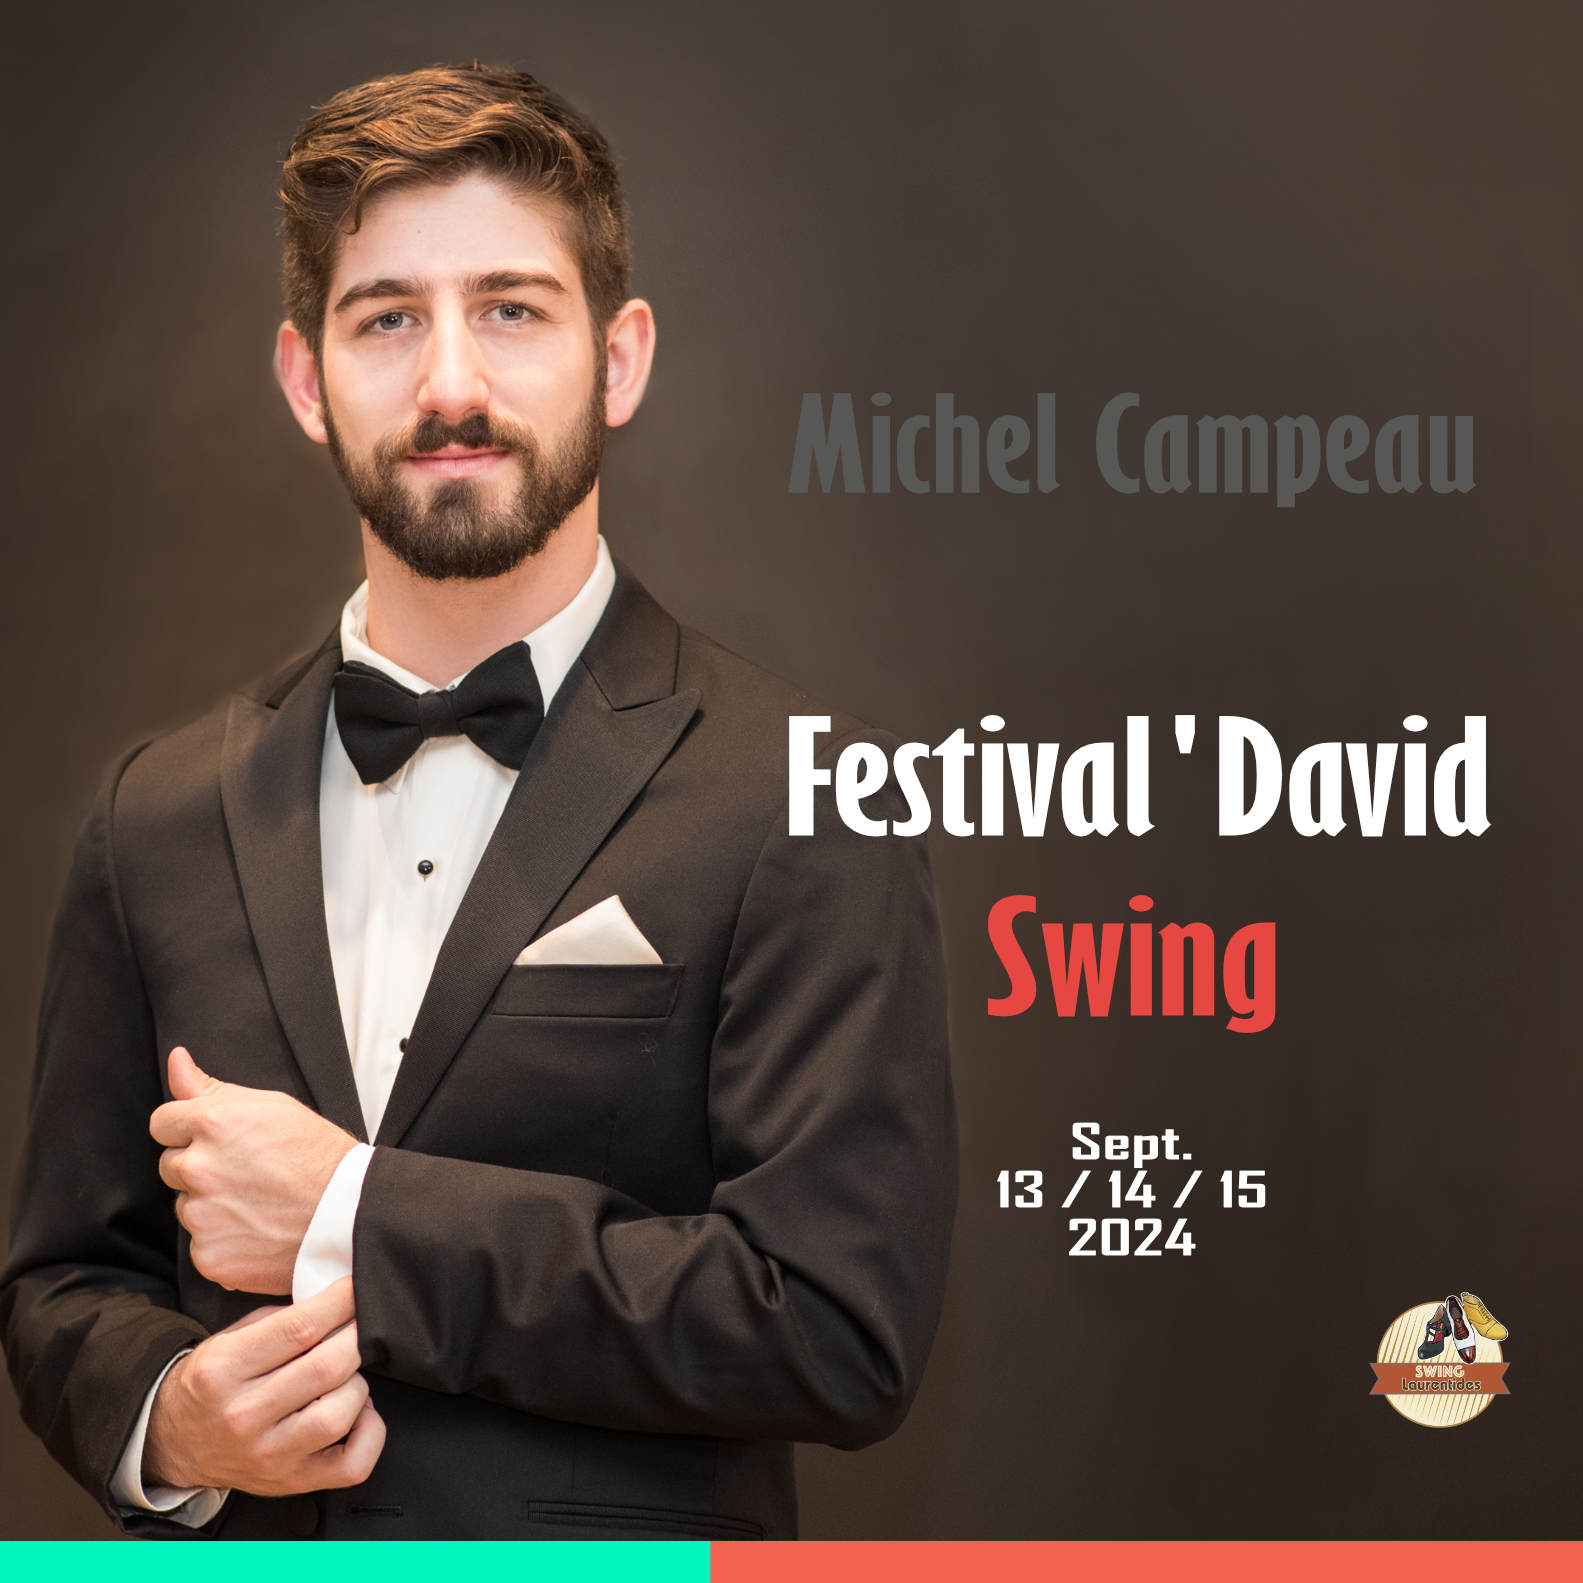 Michel Campeau Festival'David Swing